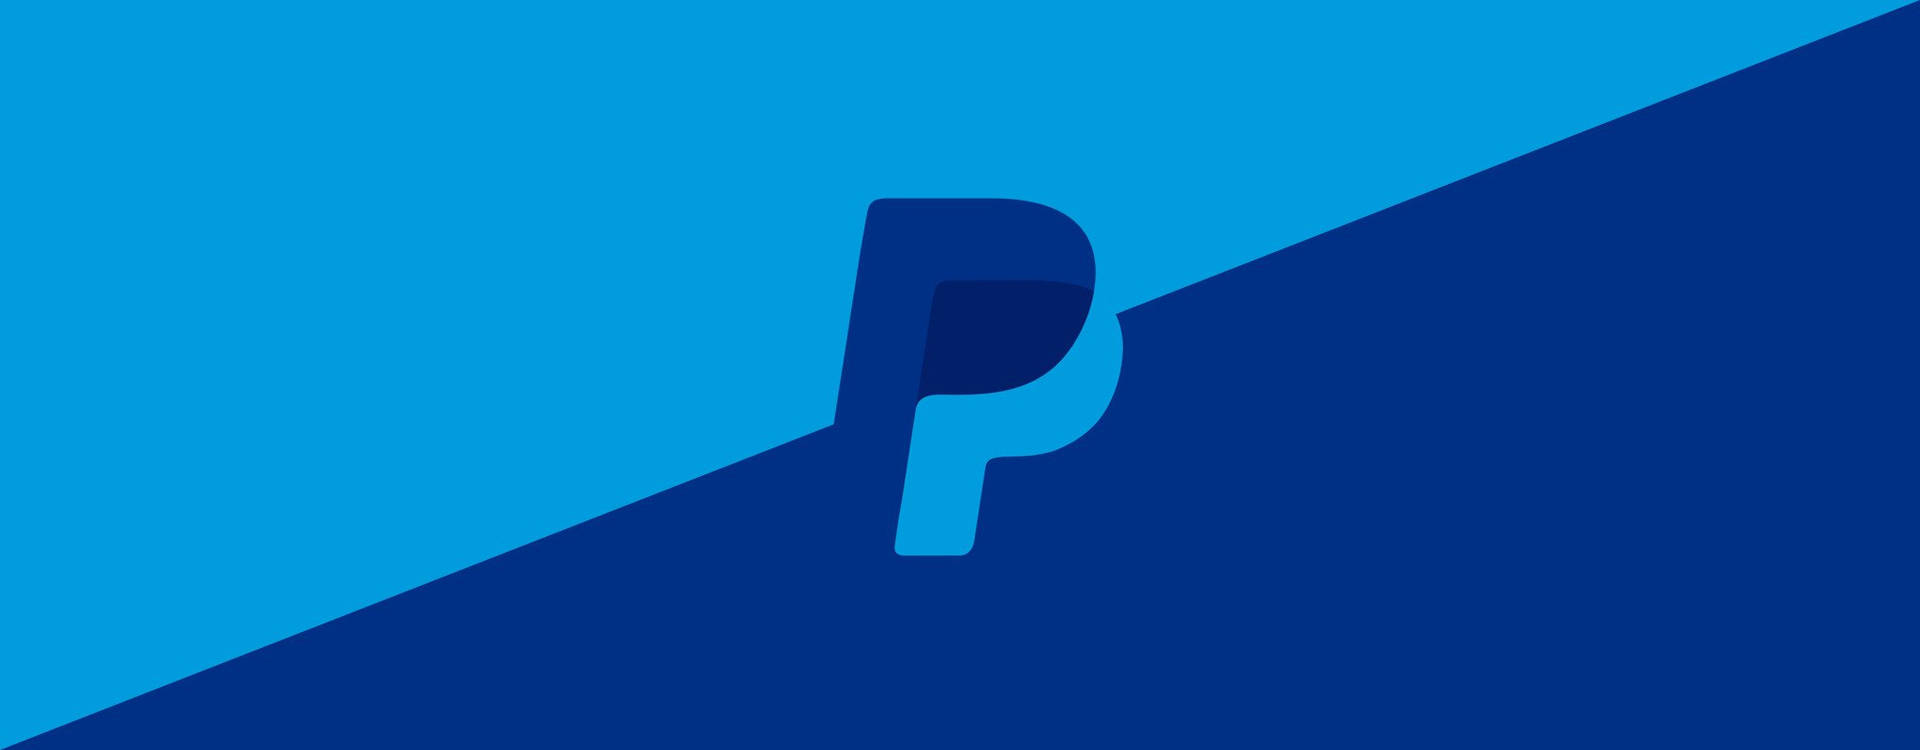 Paypal Diagonal Design Background